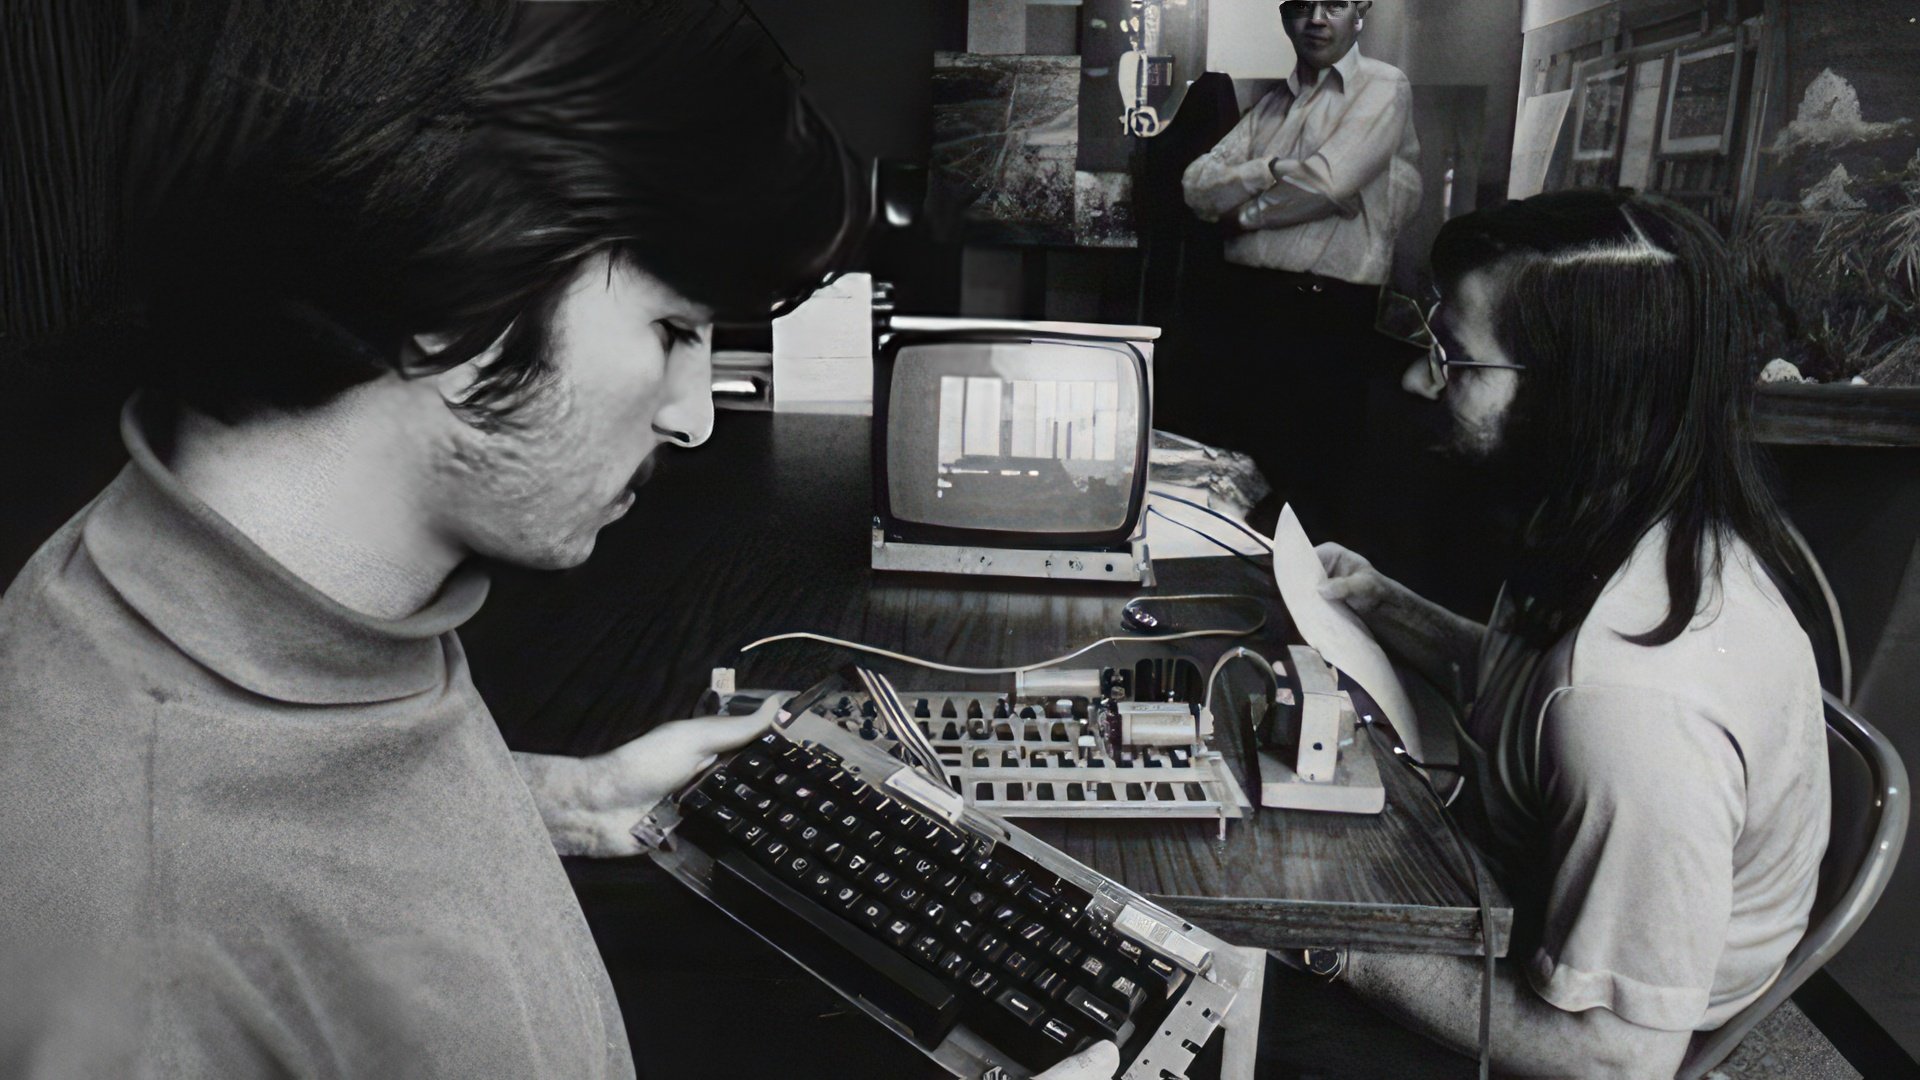 Steven Wozniak convinced Steve Jobs to create PCs for sale